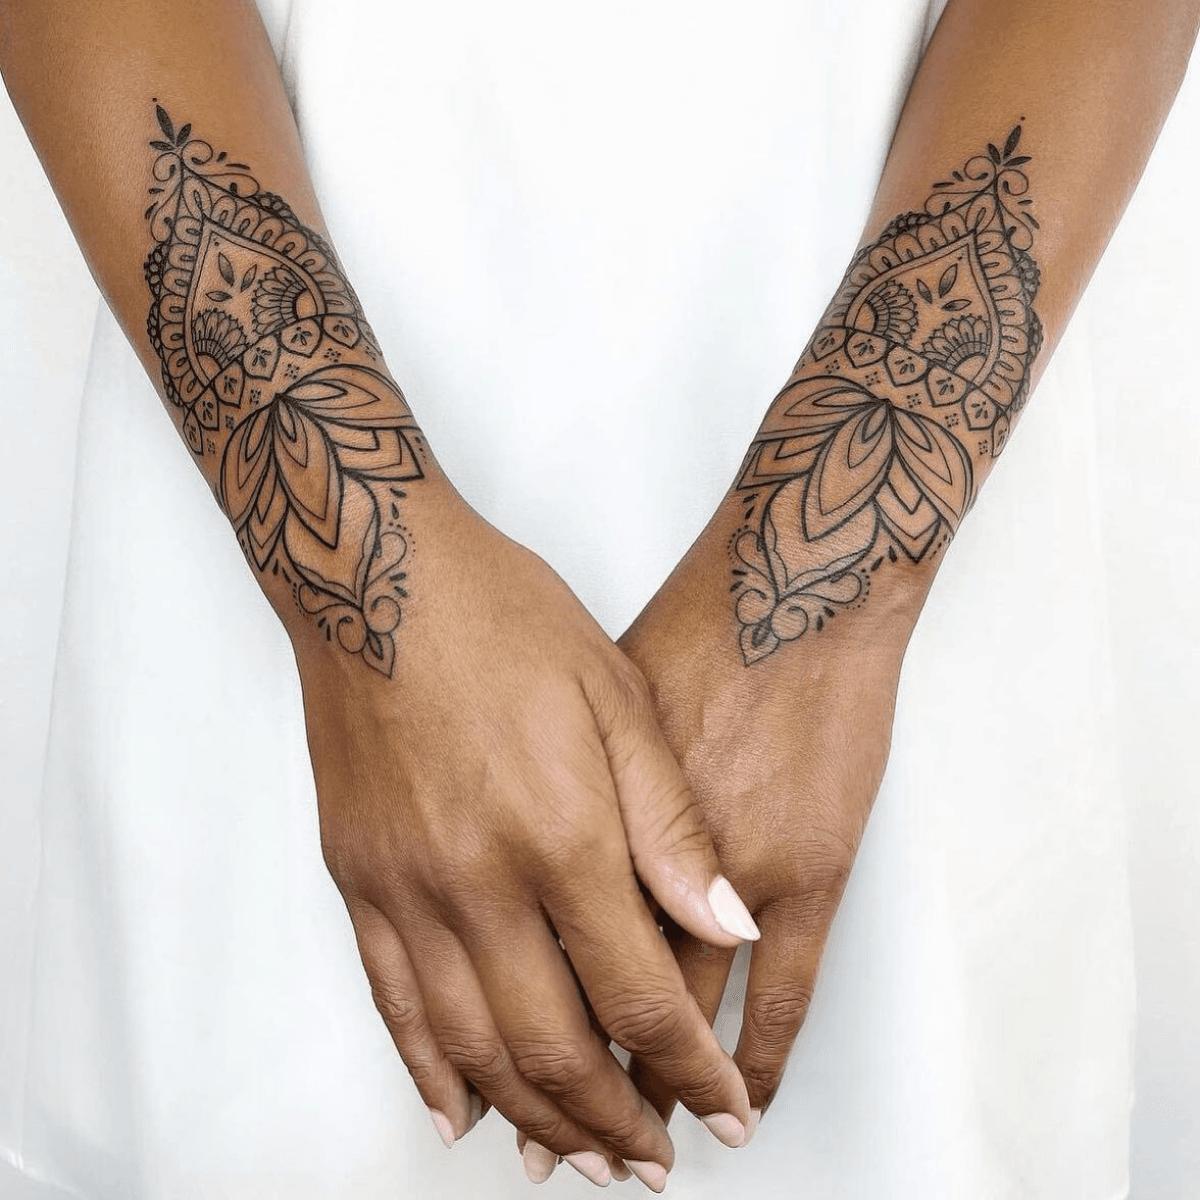 Custom tattoo designs | mask | samurai | japanes | forearm | tattoo desings  by the order| | Custom tattoo design, Hand tattoos for guys, Japanese hand  tattoos